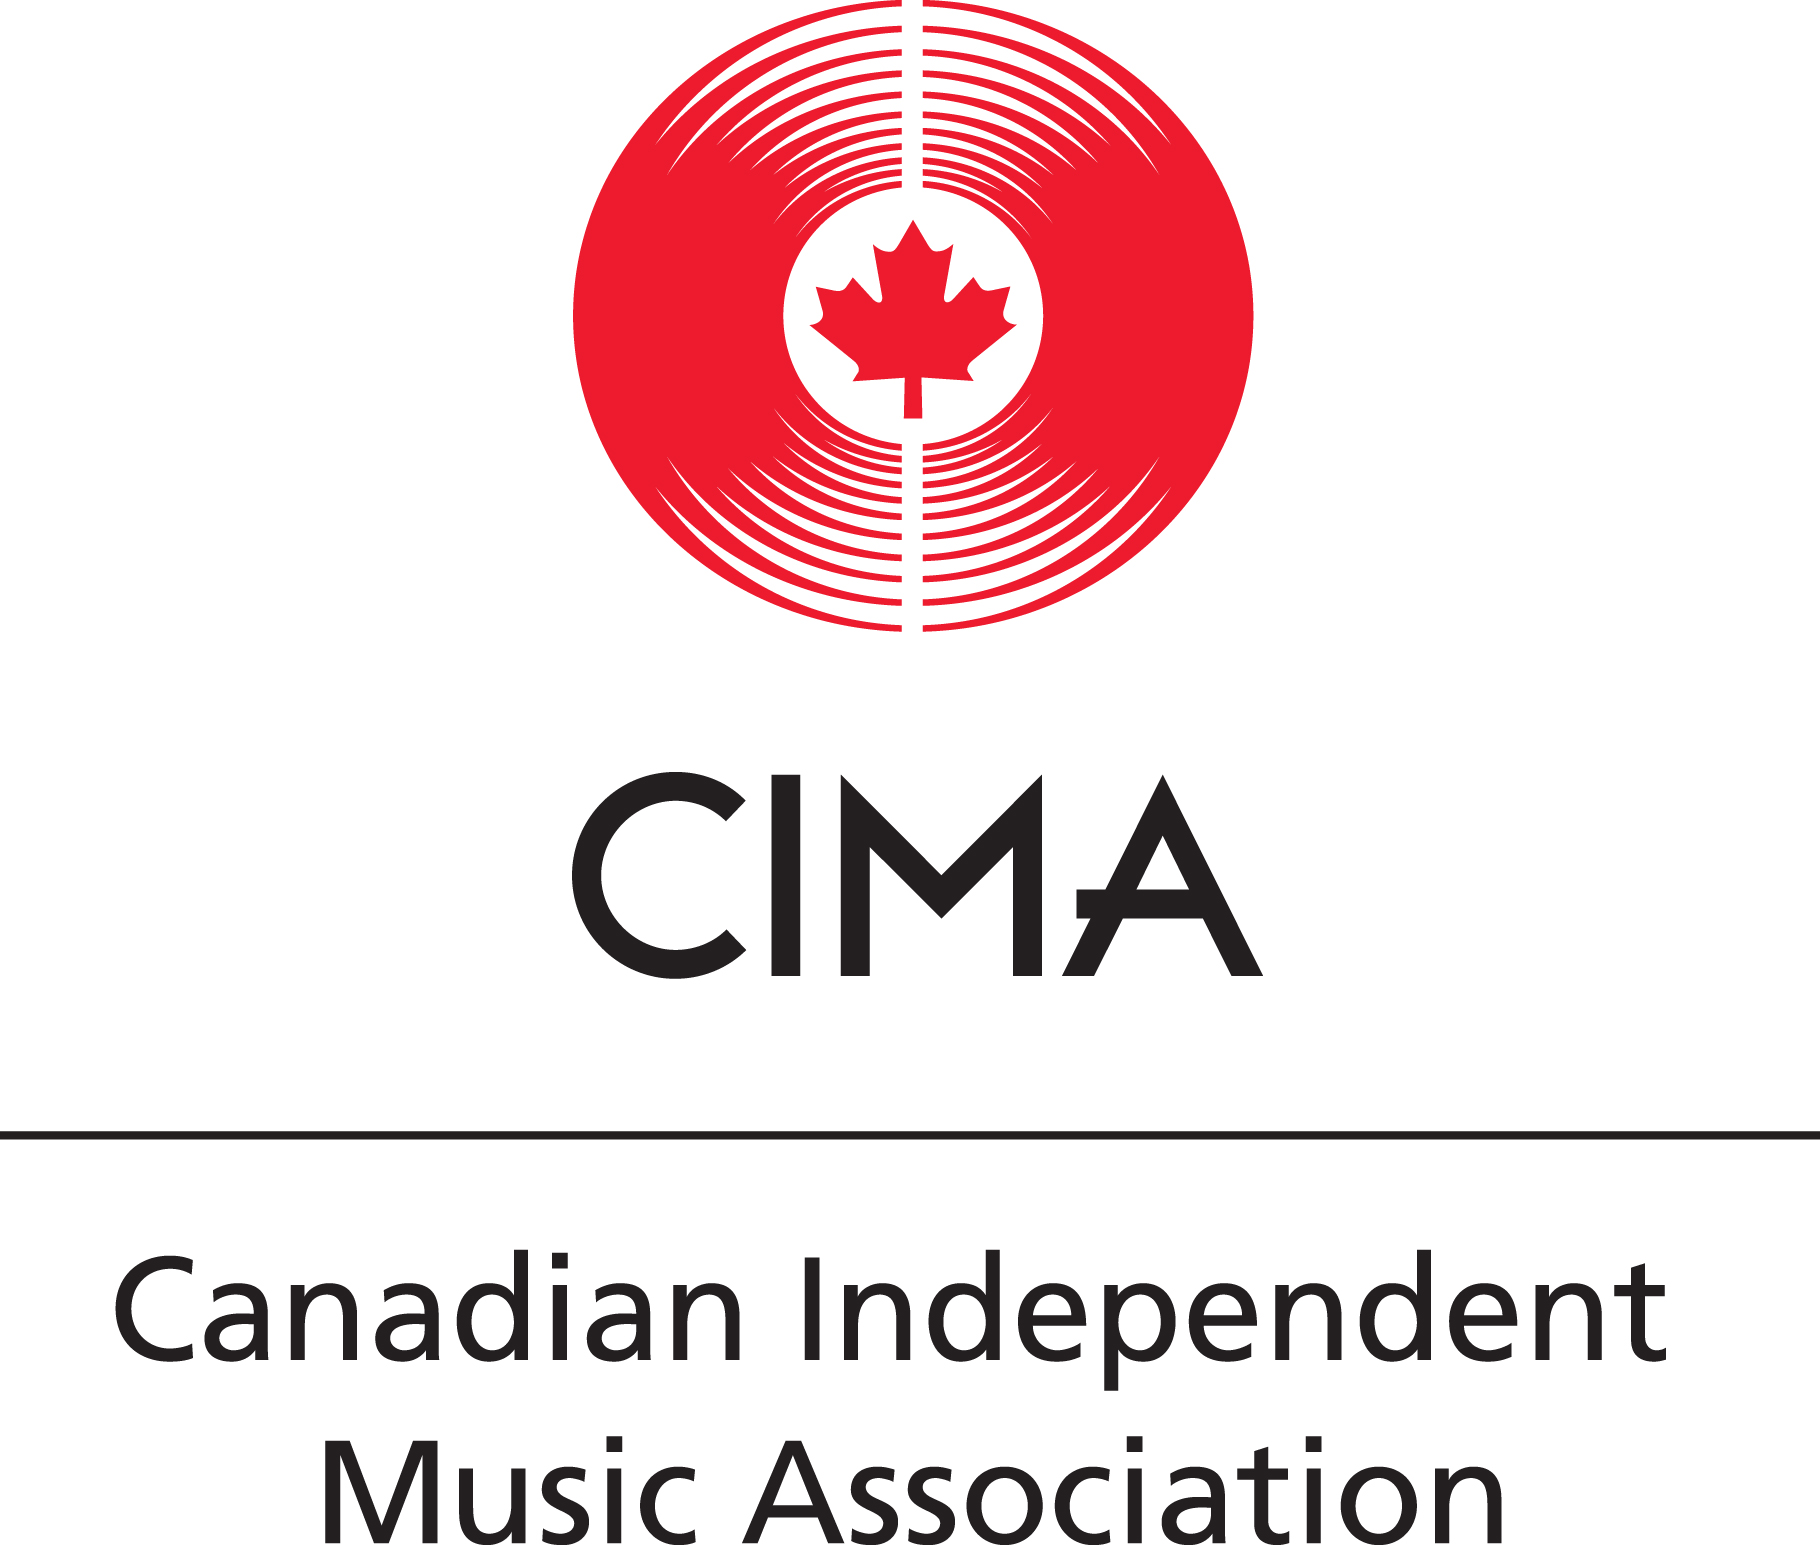 CIMA (Canadian Independent Music Association)